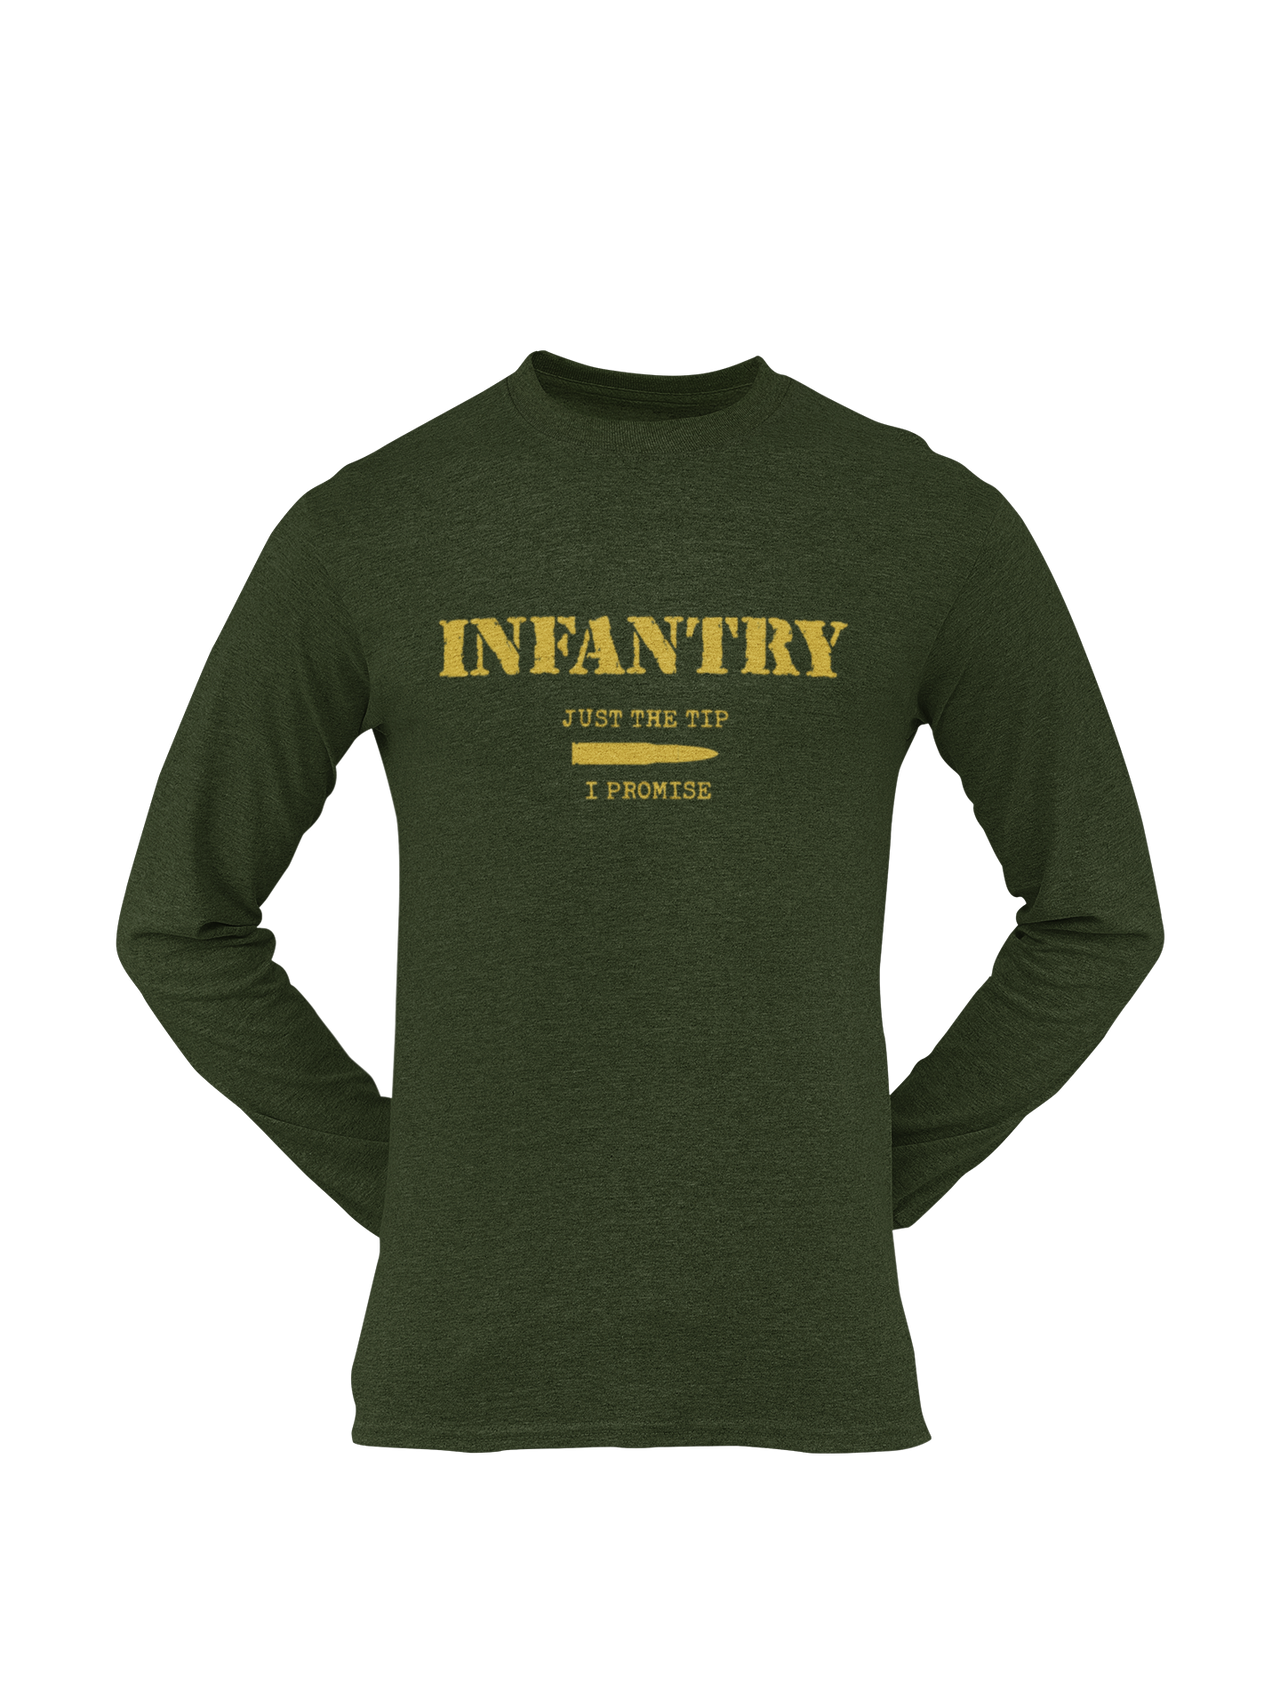 Infantry T-shirt - Just the Tip, I Promise (Men)